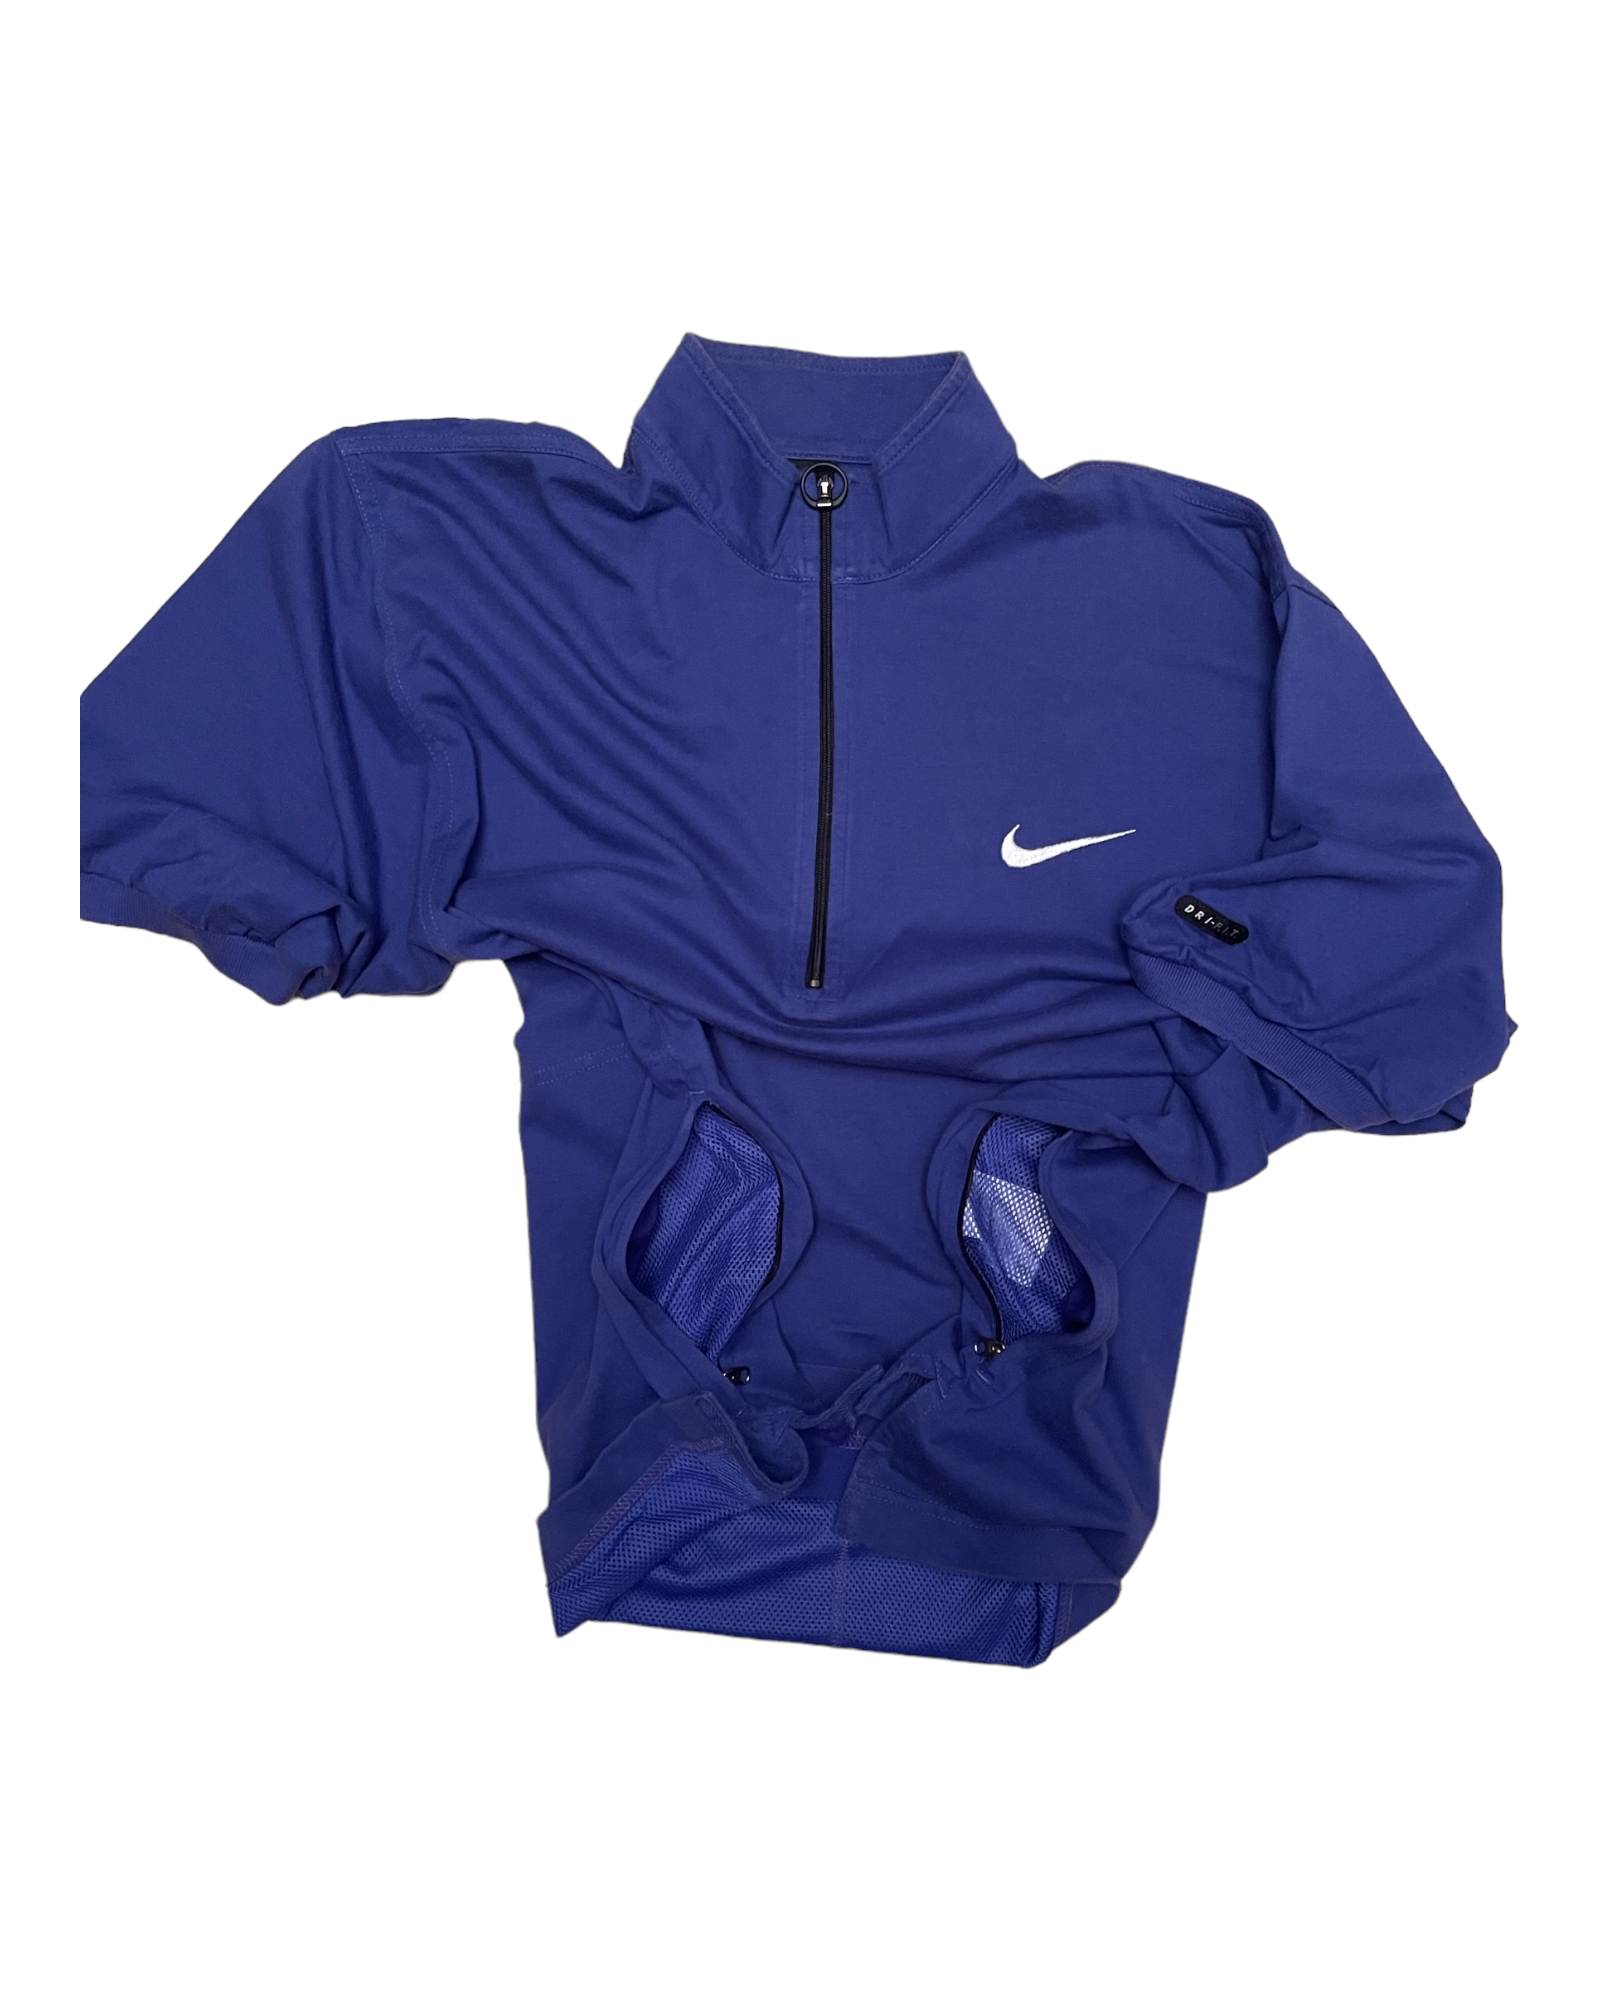 Vintage Nike Andre Agassi Tennis Shirt 90's Size S Dri F.I.T. Blue